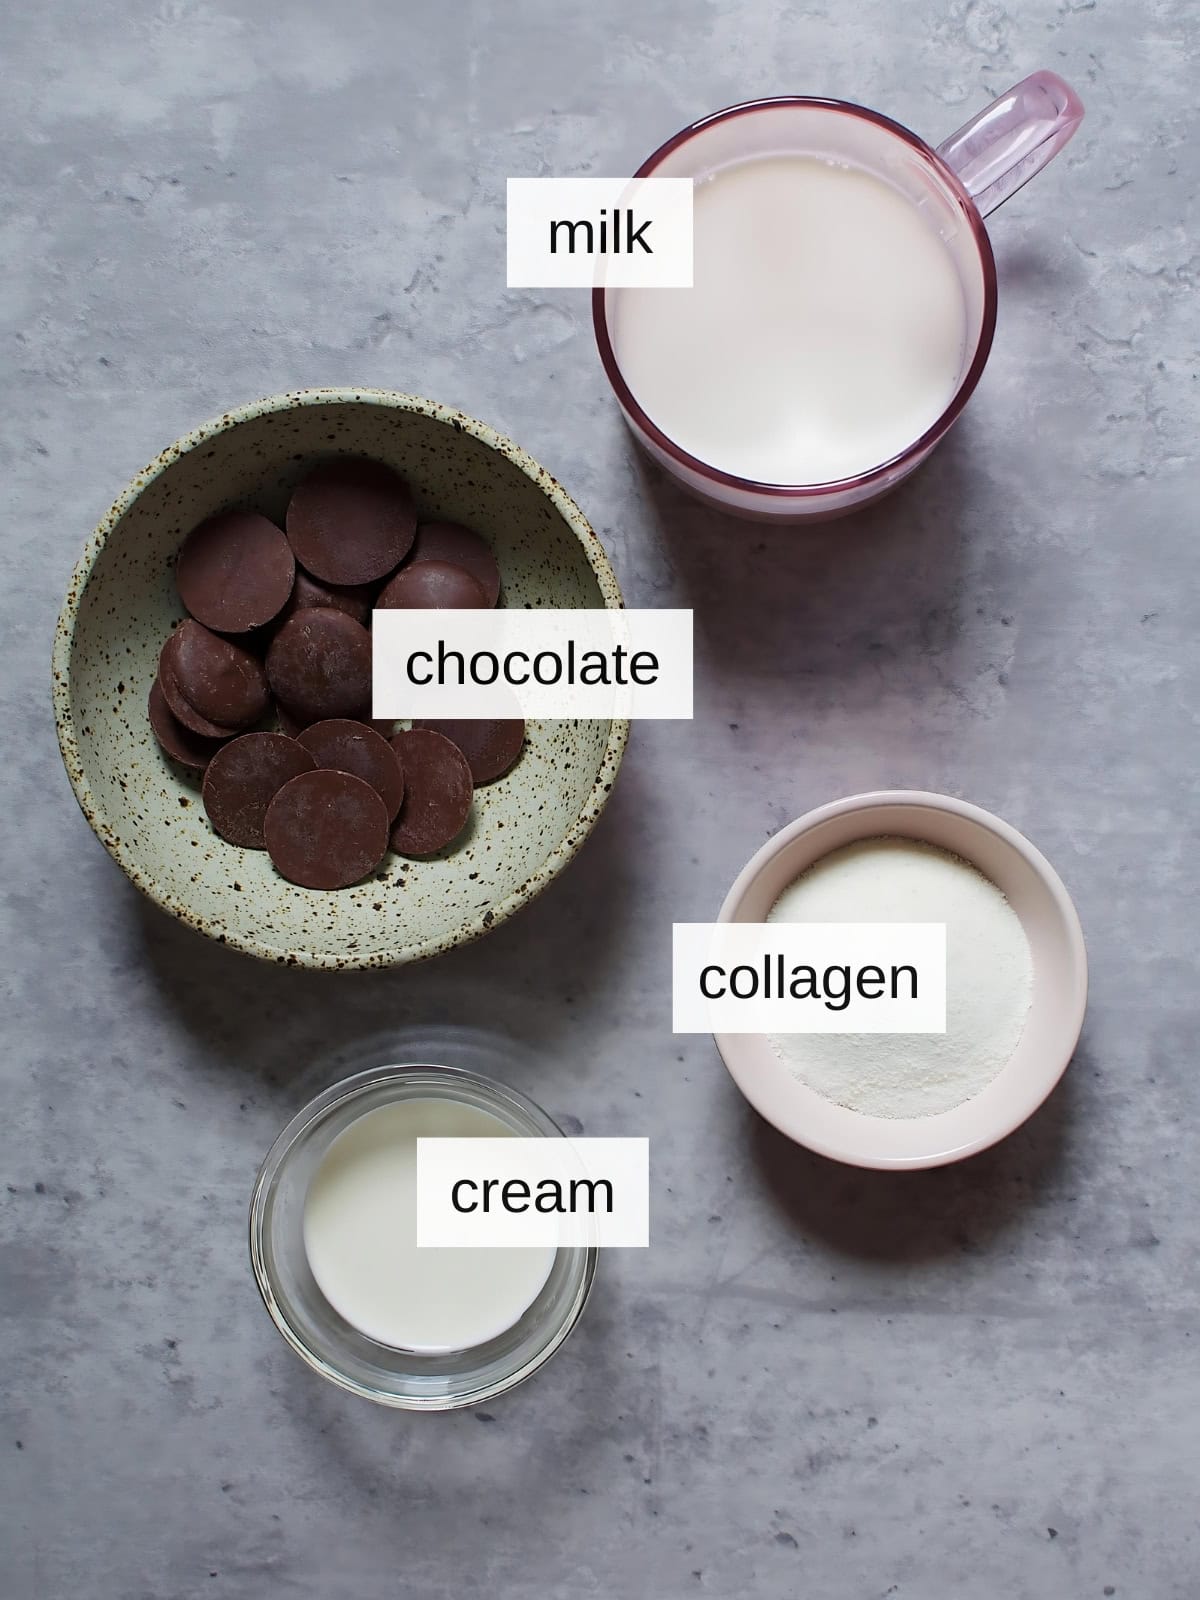 Collagen hot chocolate recipe ingredients with milk, chocolate, collagen, and cream